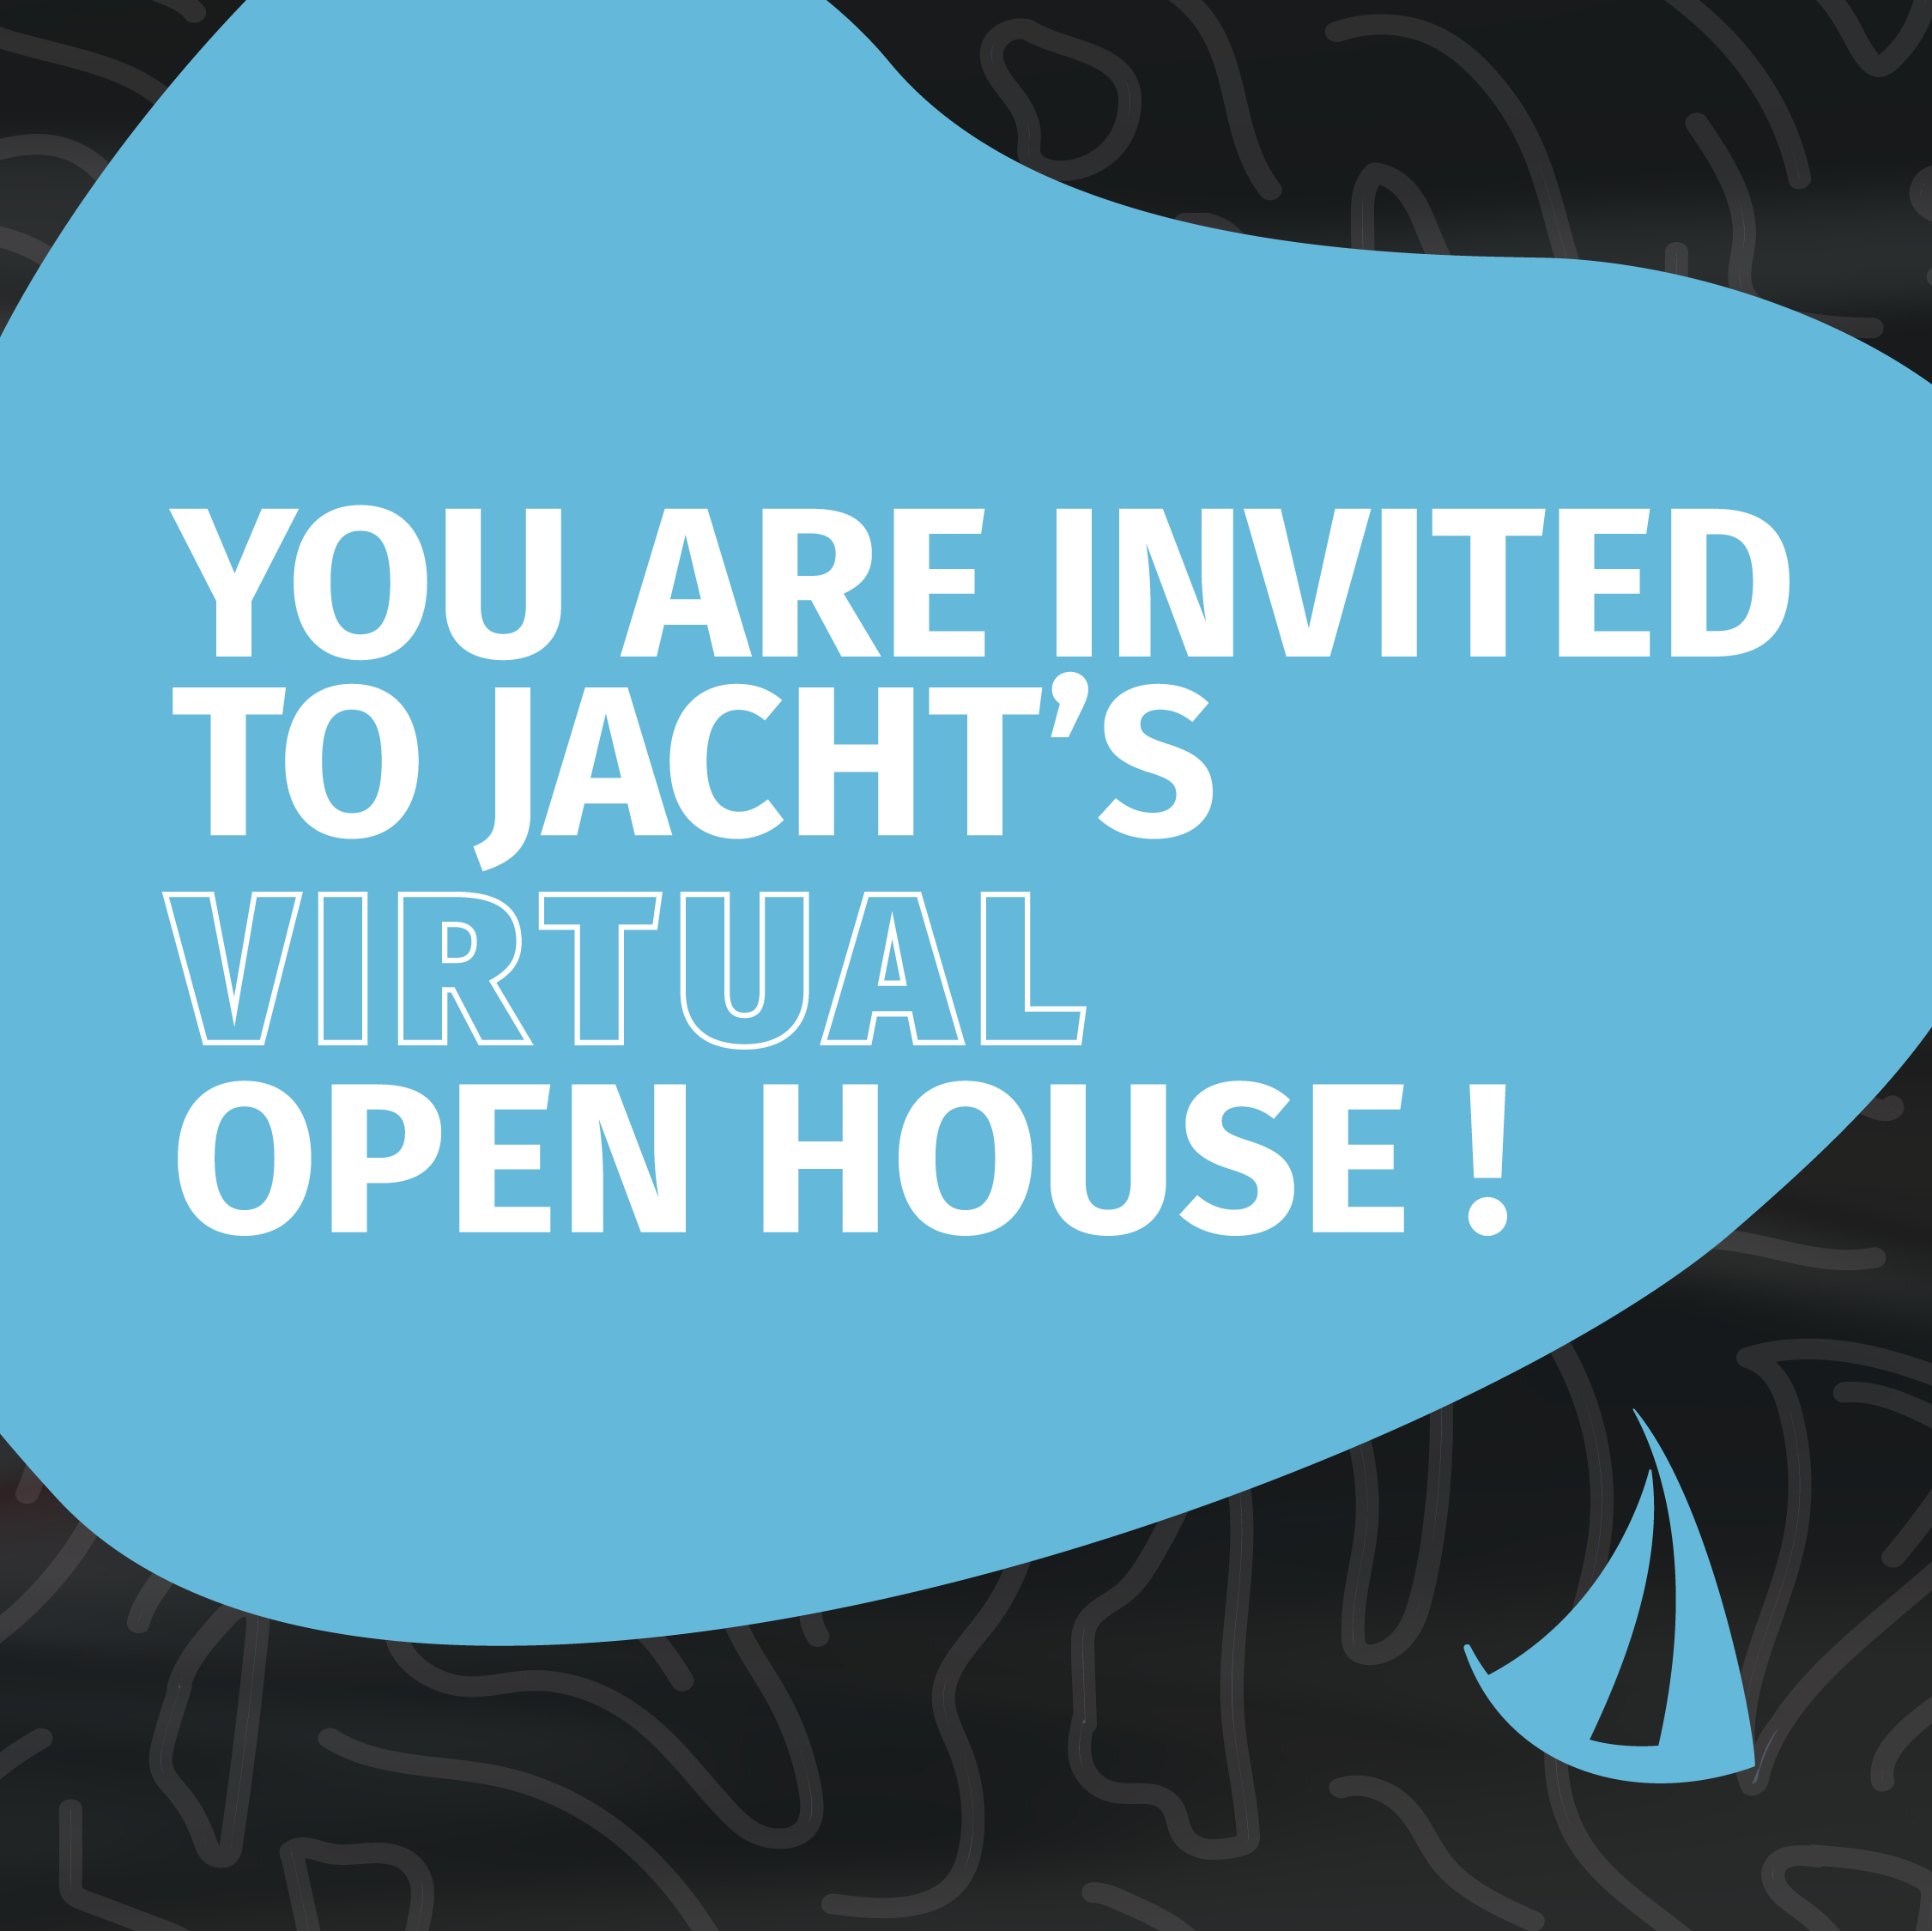 Jacht Open House graphic